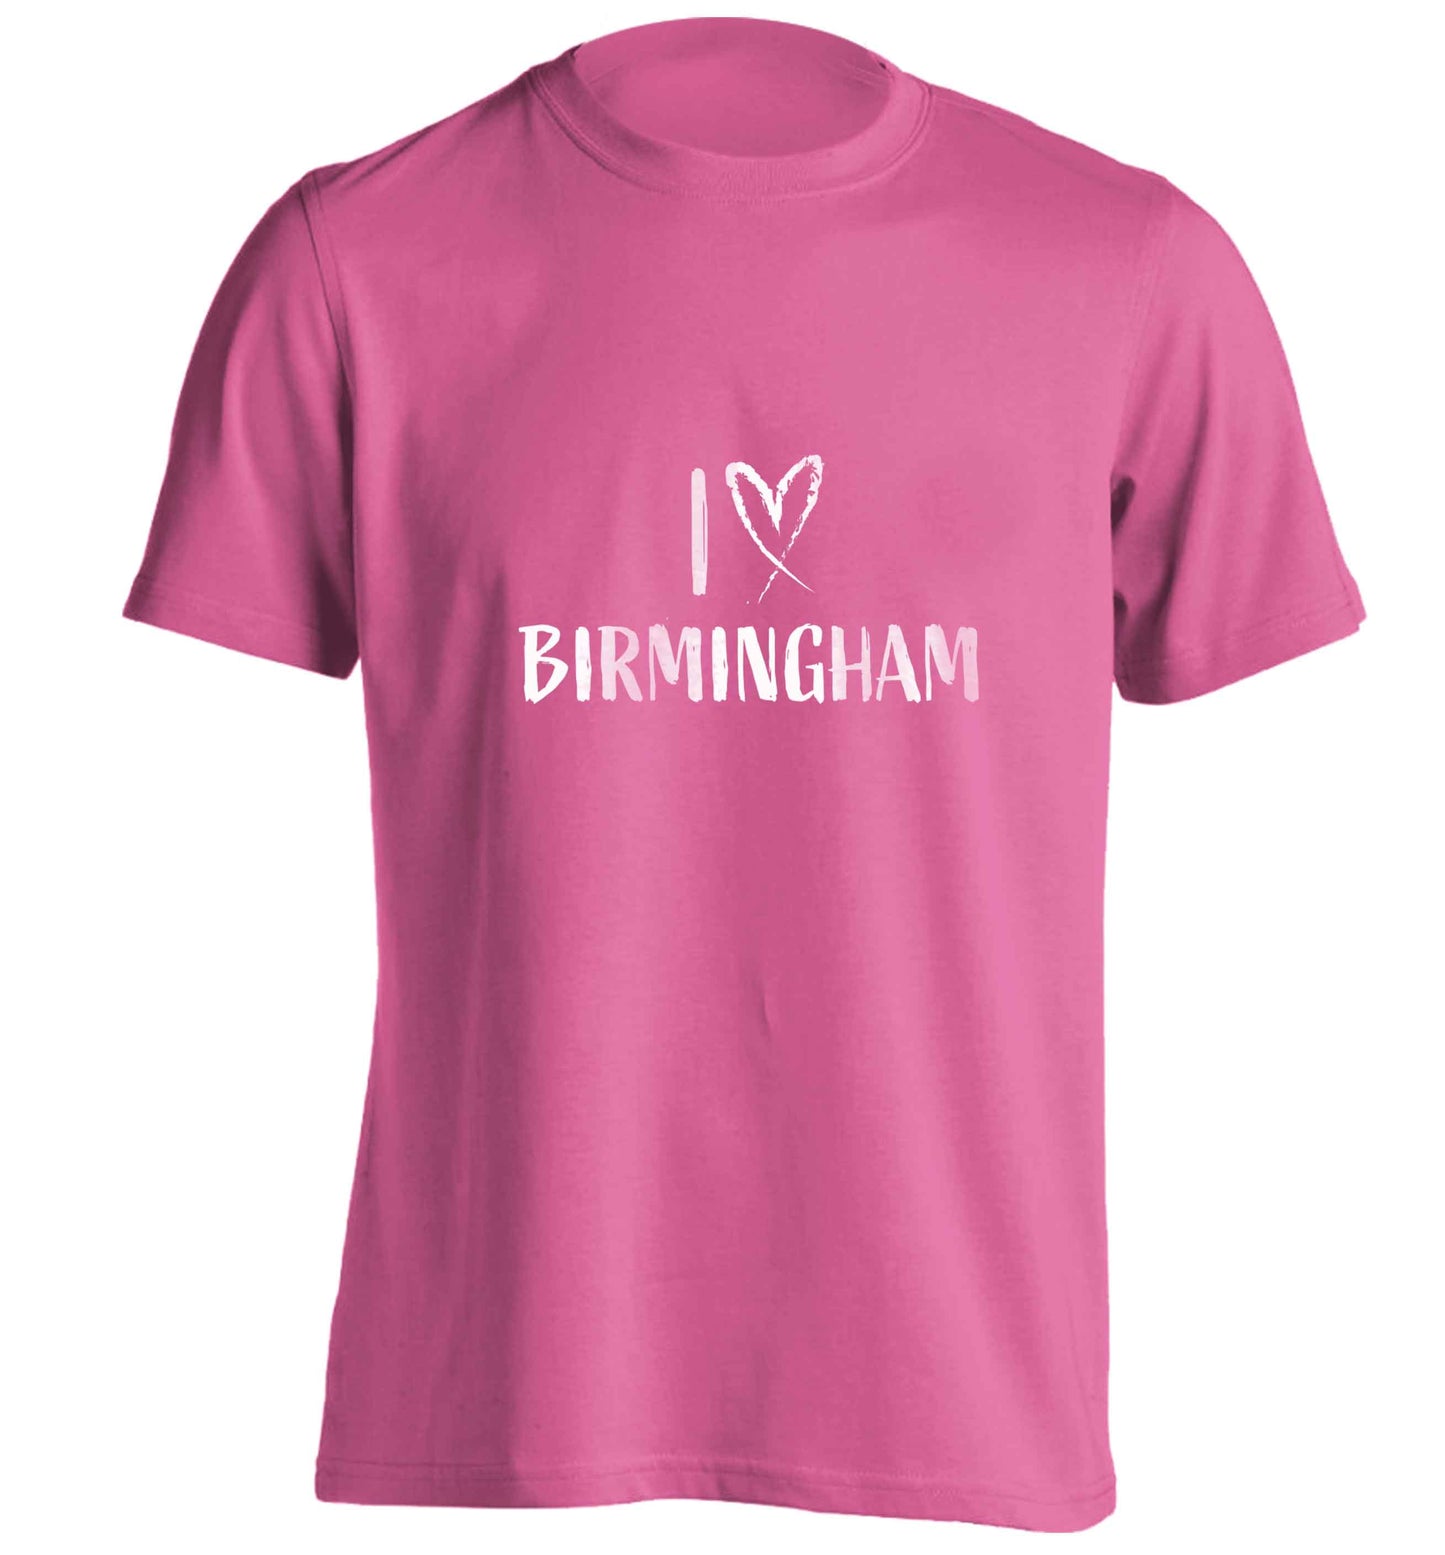 I love Birmingham adults unisex pink Tshirt 2XL